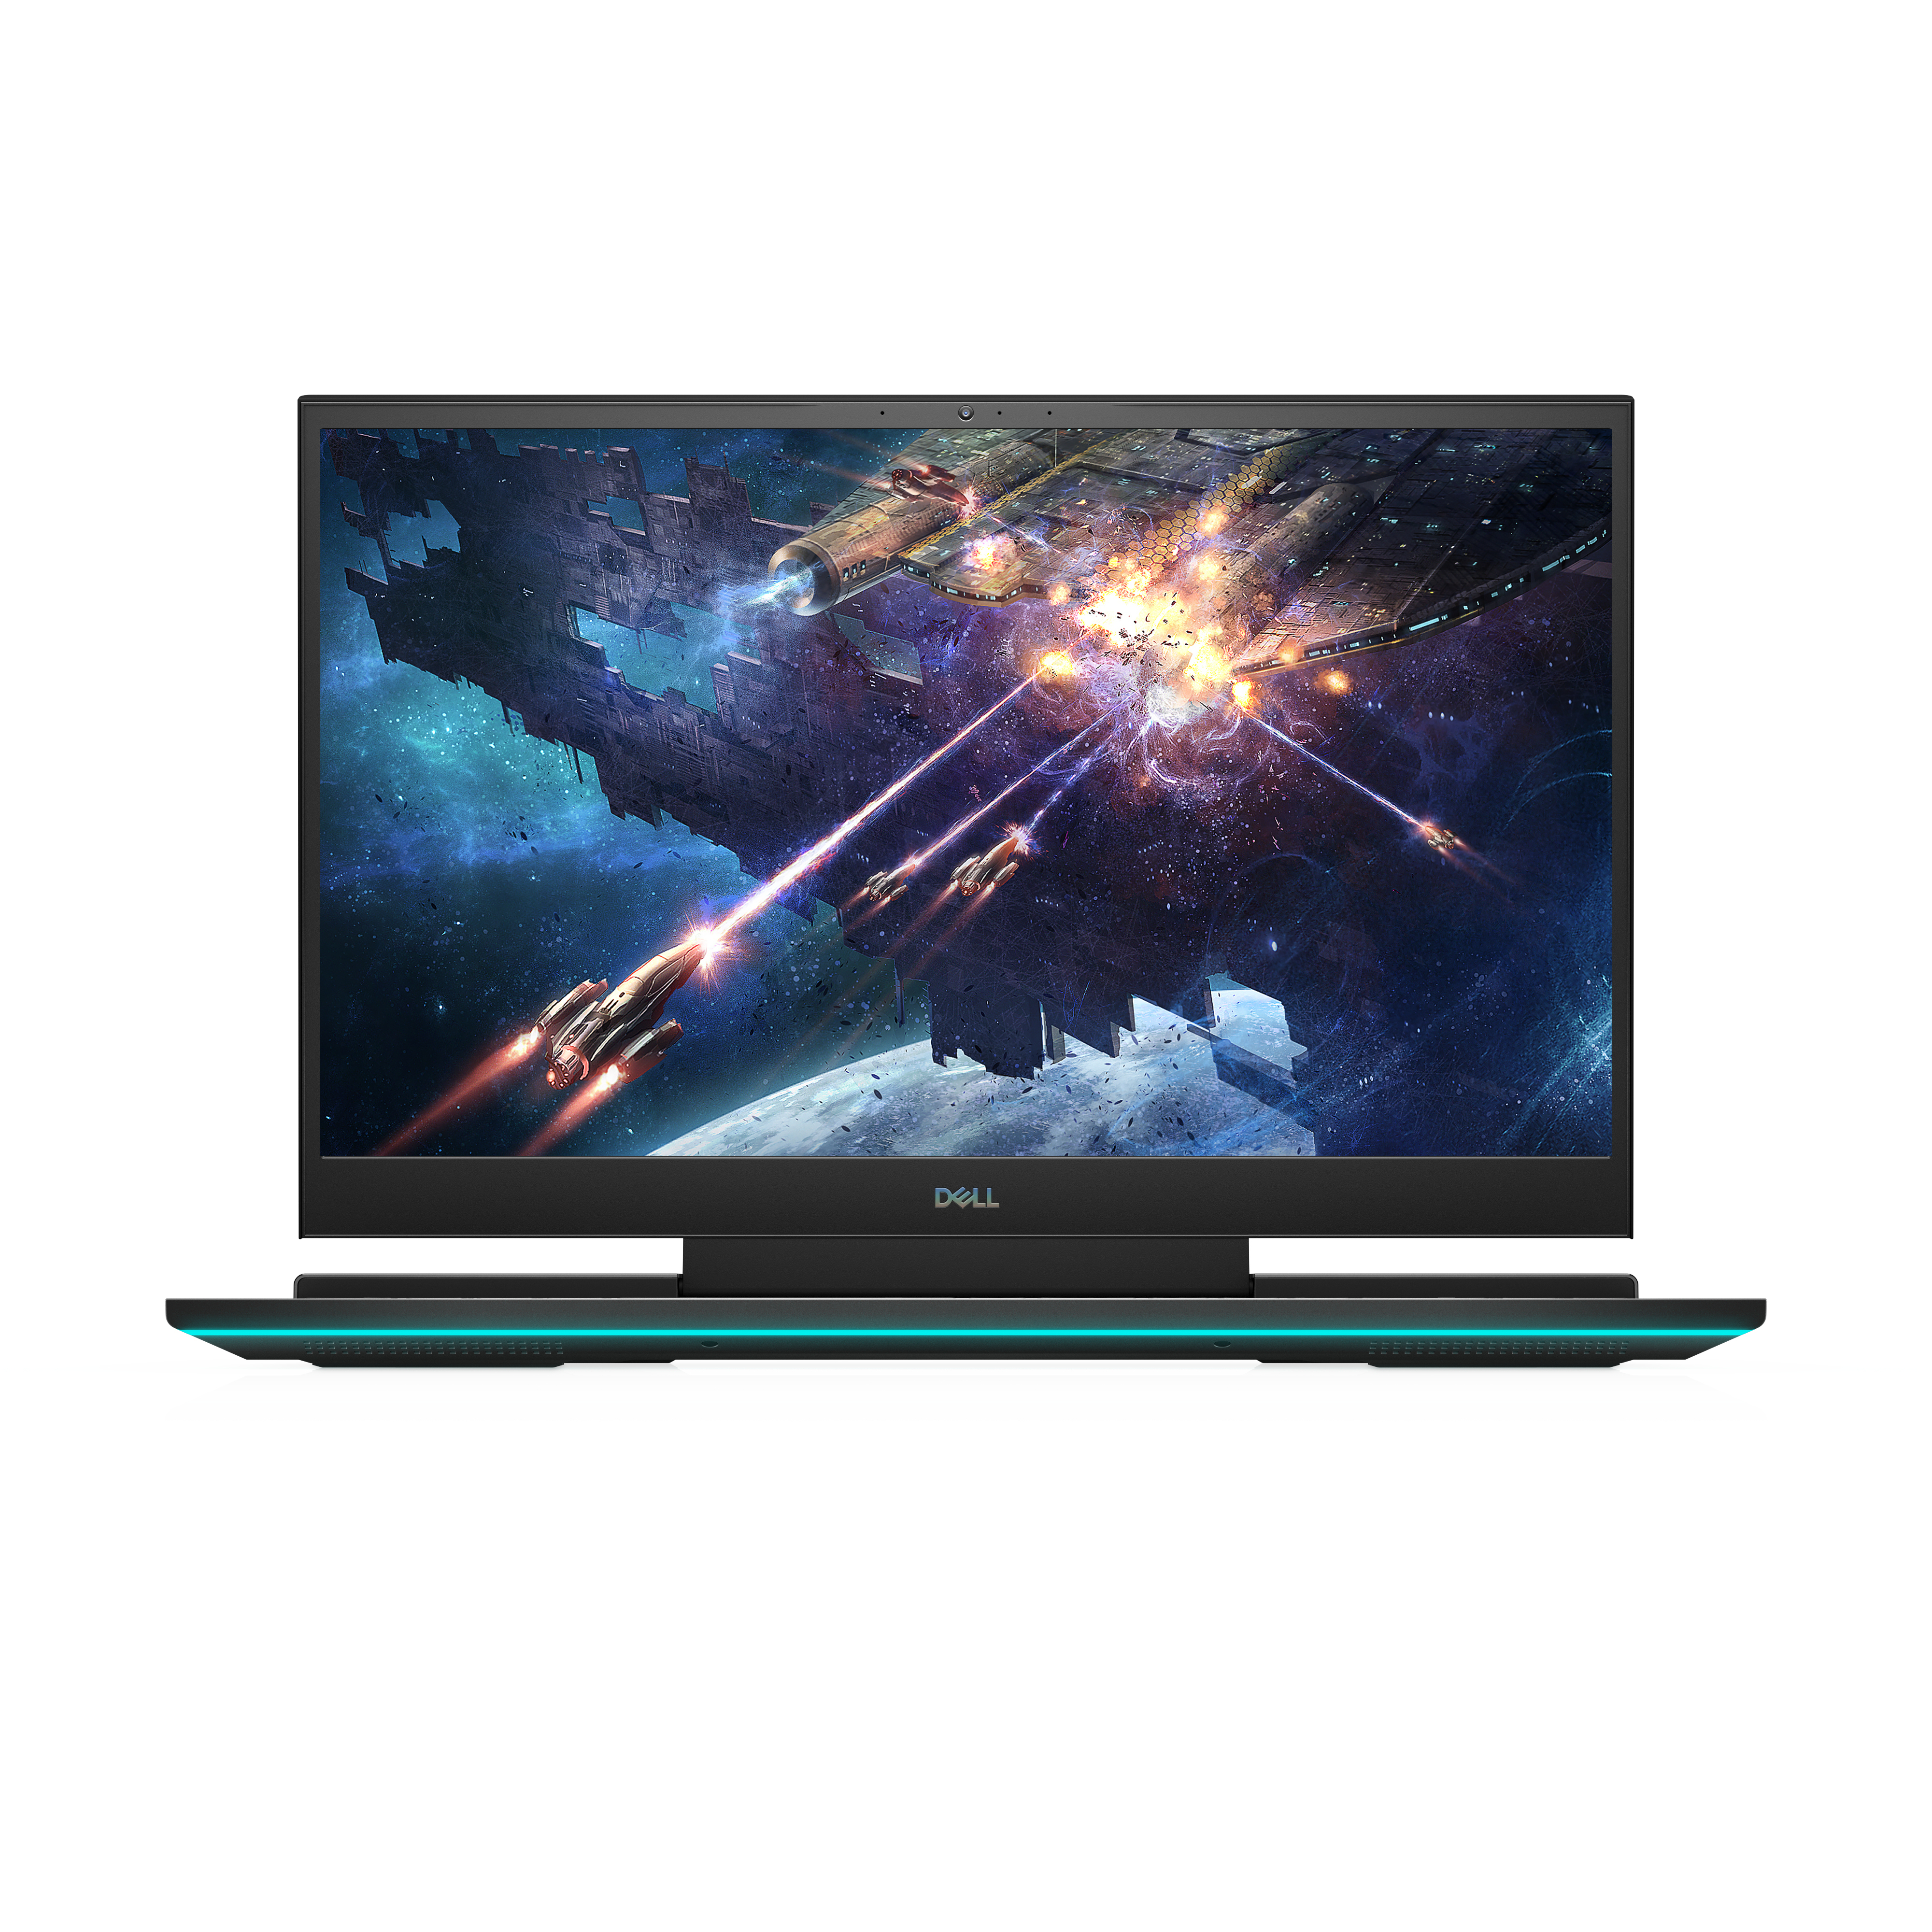 Laptop Gamer Dell G7 7700 17.3" Ci7 10750H 16G 512G Rtx2070 W10 9Rk2F